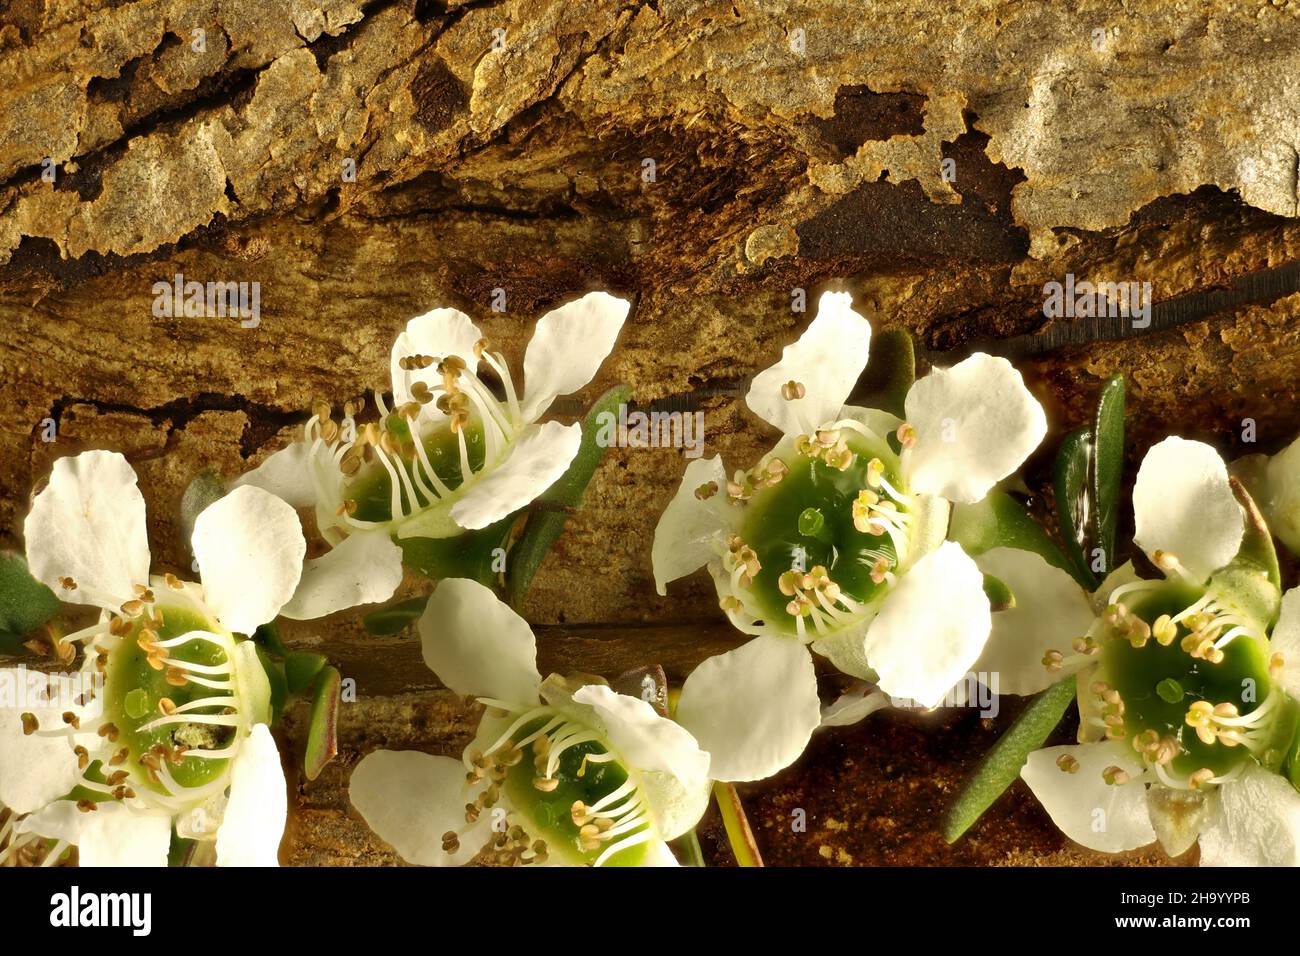 Macro view of Heath Teatree (Leptospermum myrsinoides) flowers against eucalypt bark, Australian native plant Stock Photo